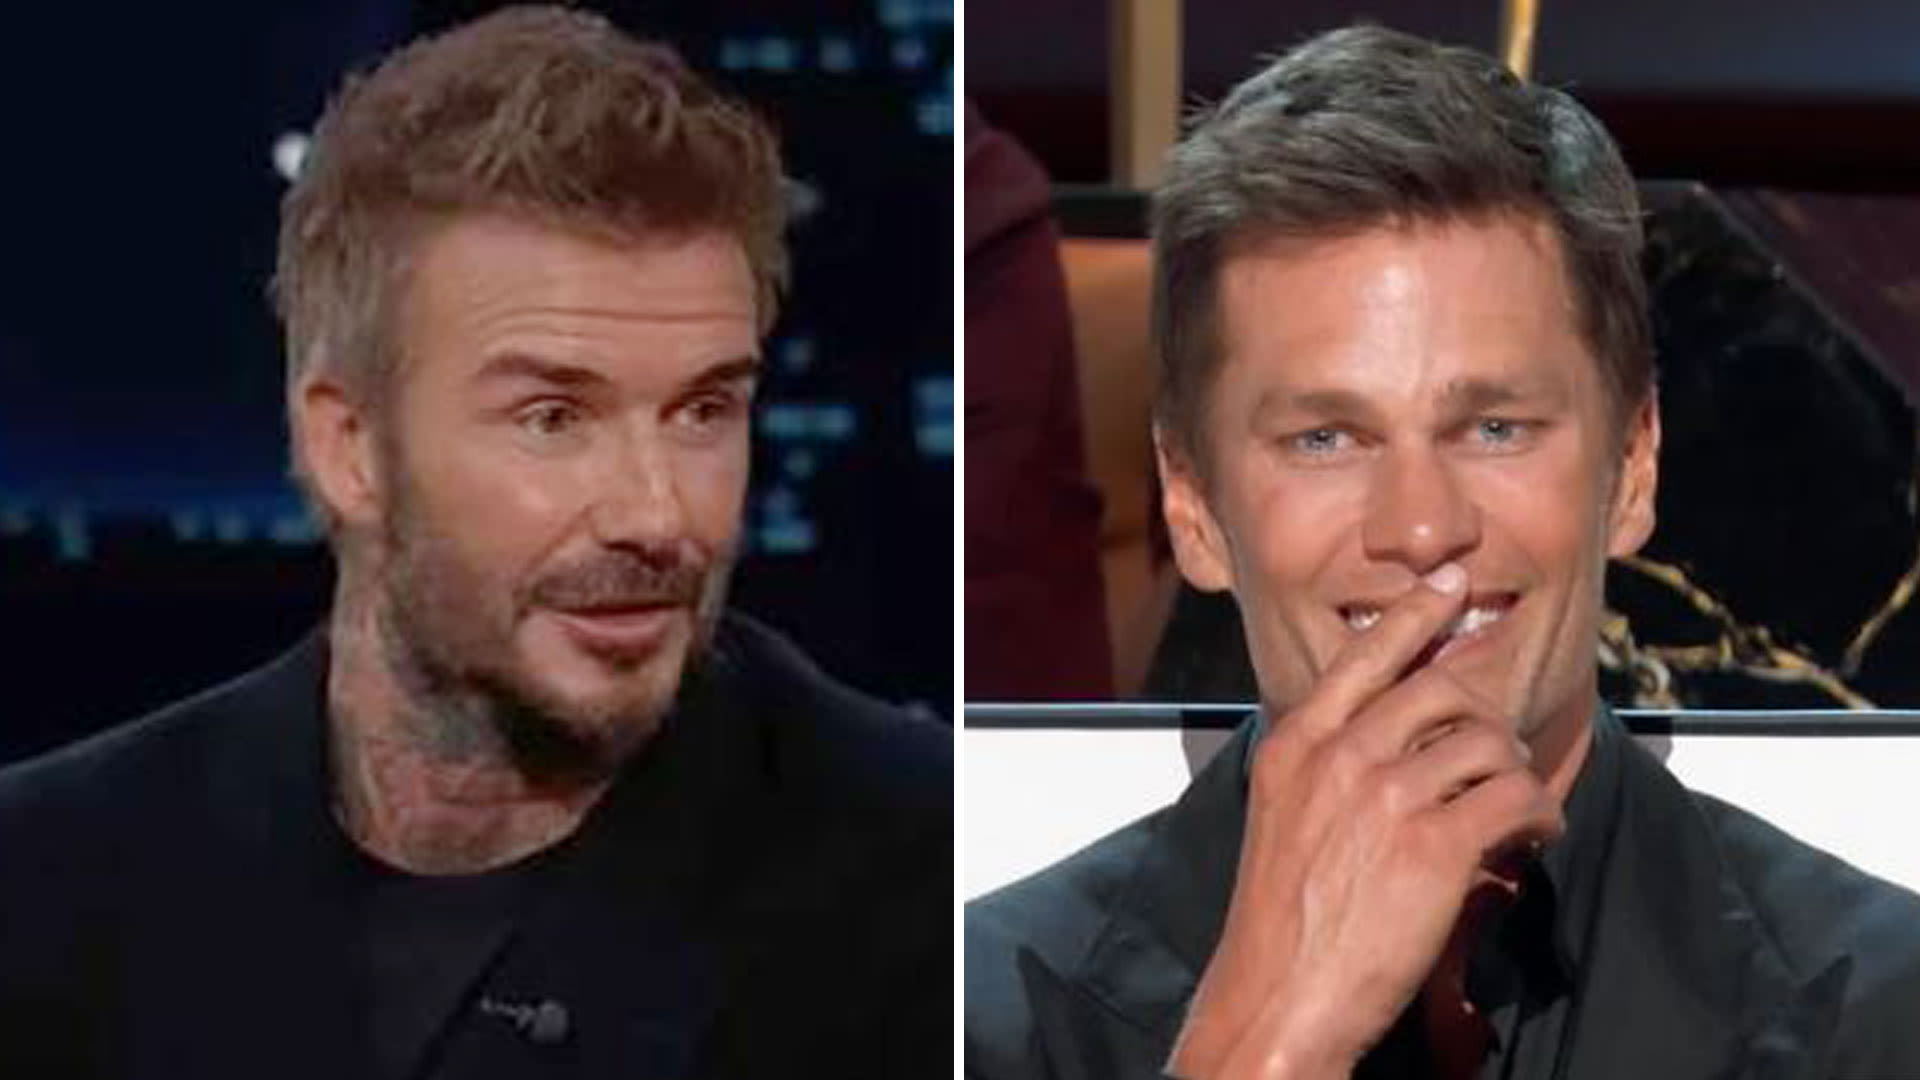 Beckham checks on Tom Brady after Birmingham investor's 'hard to watch' roast